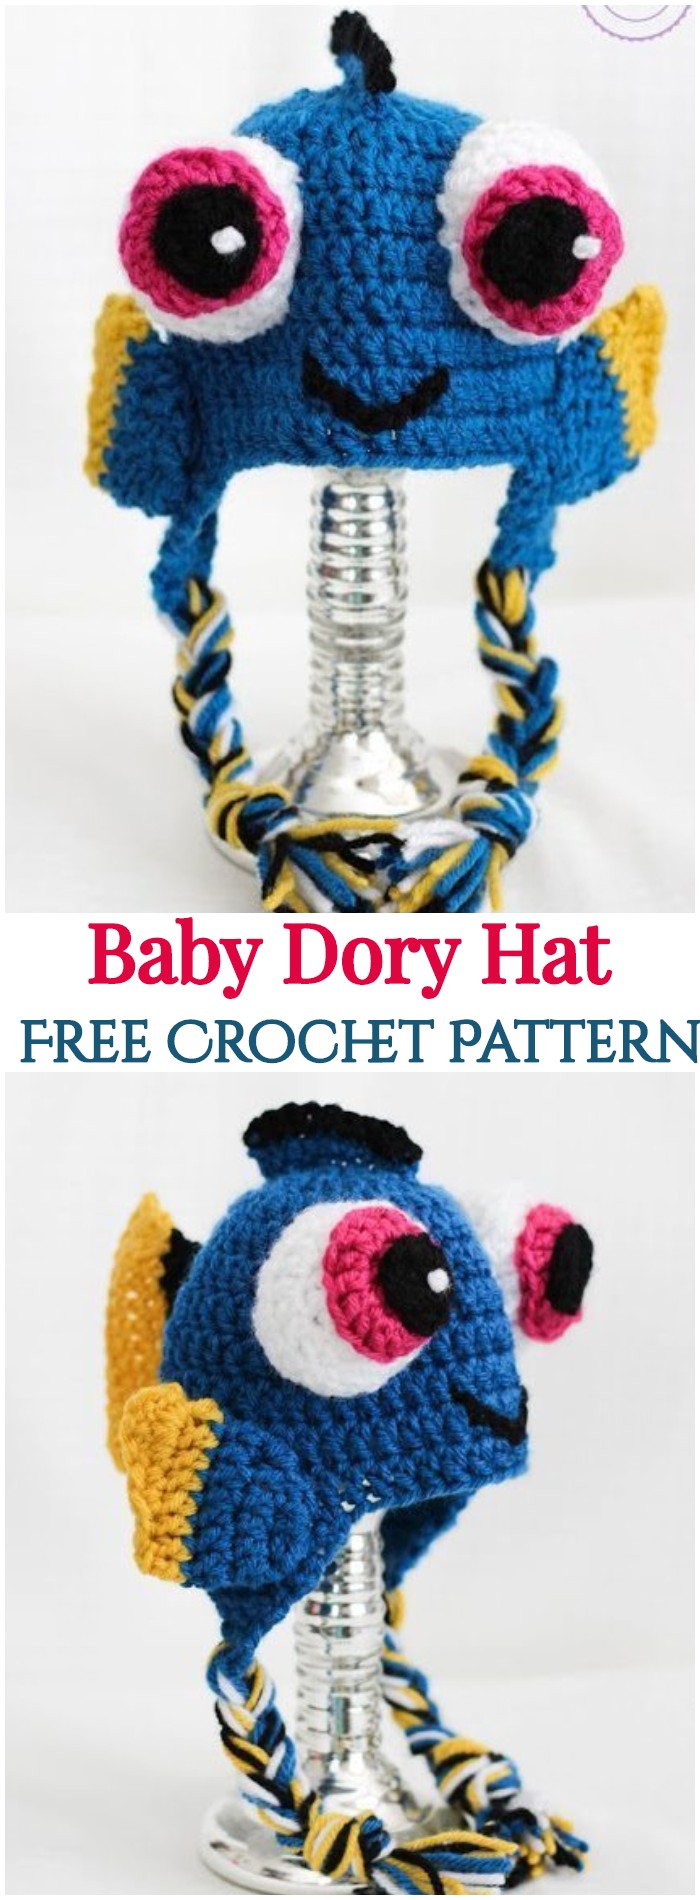 Crochet Baby Dory Hat